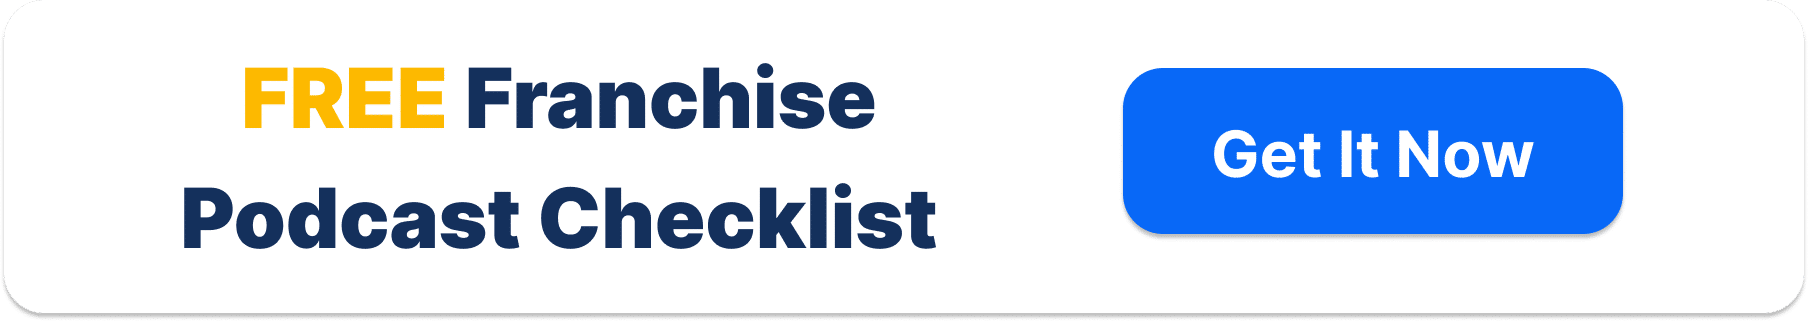 Franchise Podcast Checklist Banner